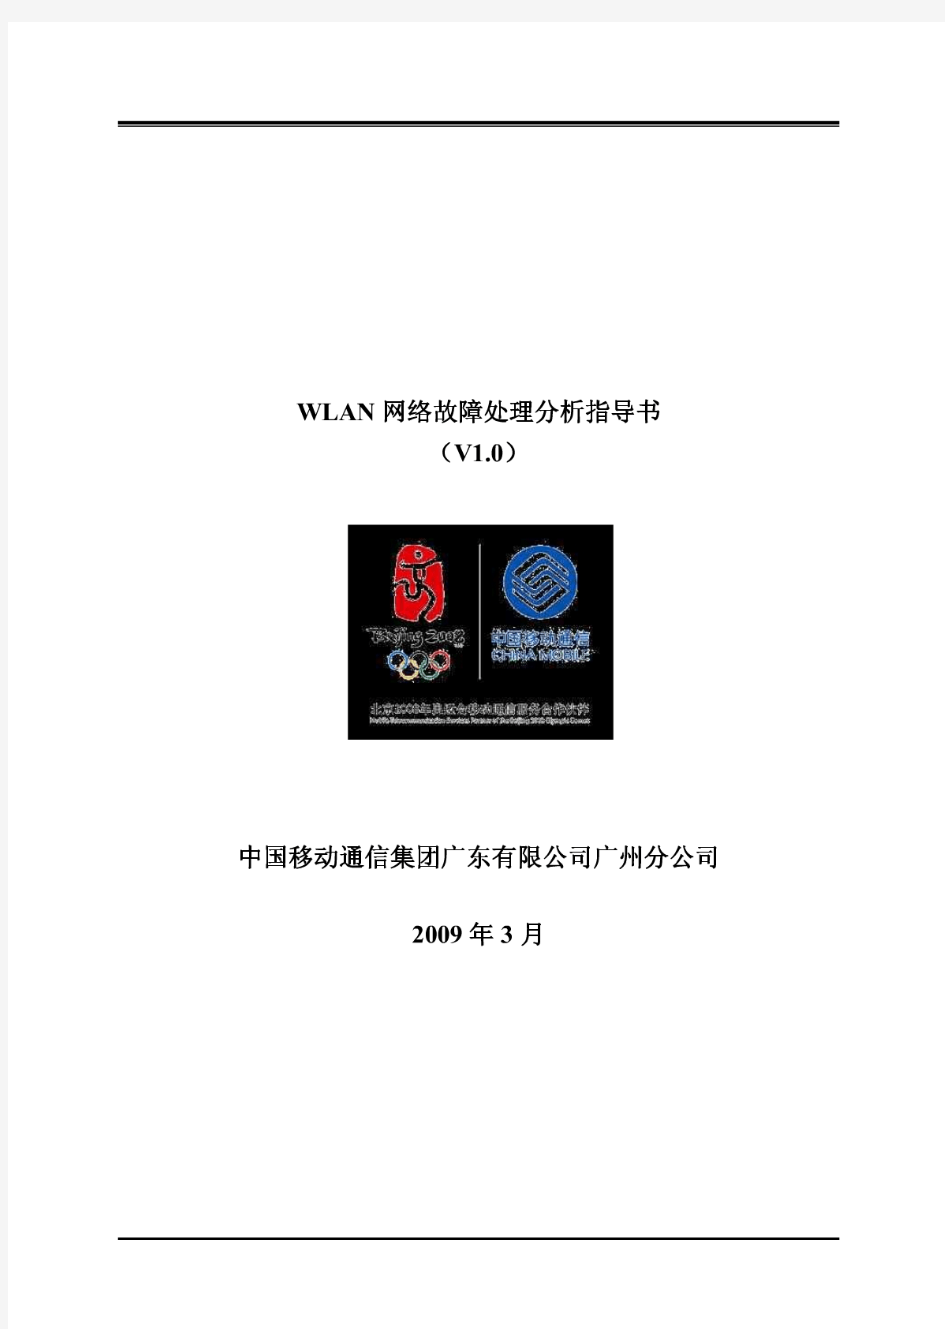 WLAN网络故障处理分析指导书